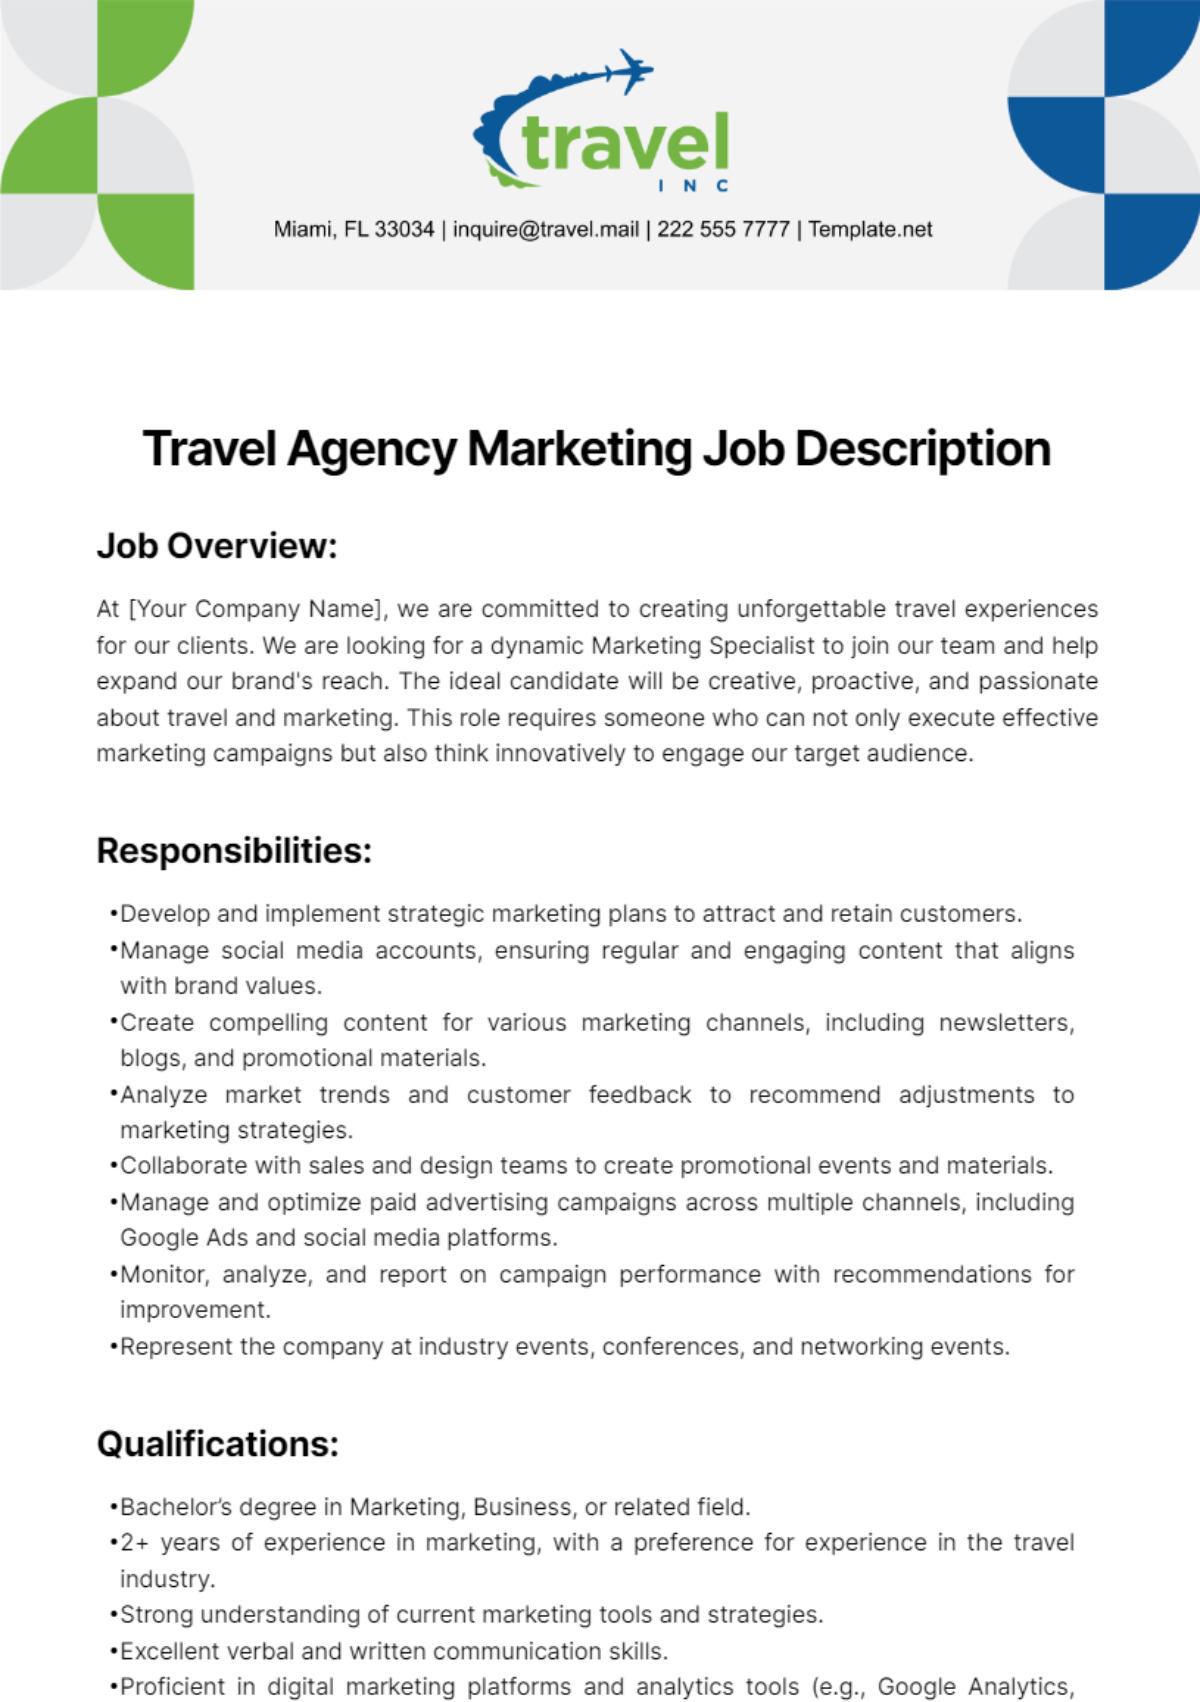 Travel Agency Marketing Job Description Template